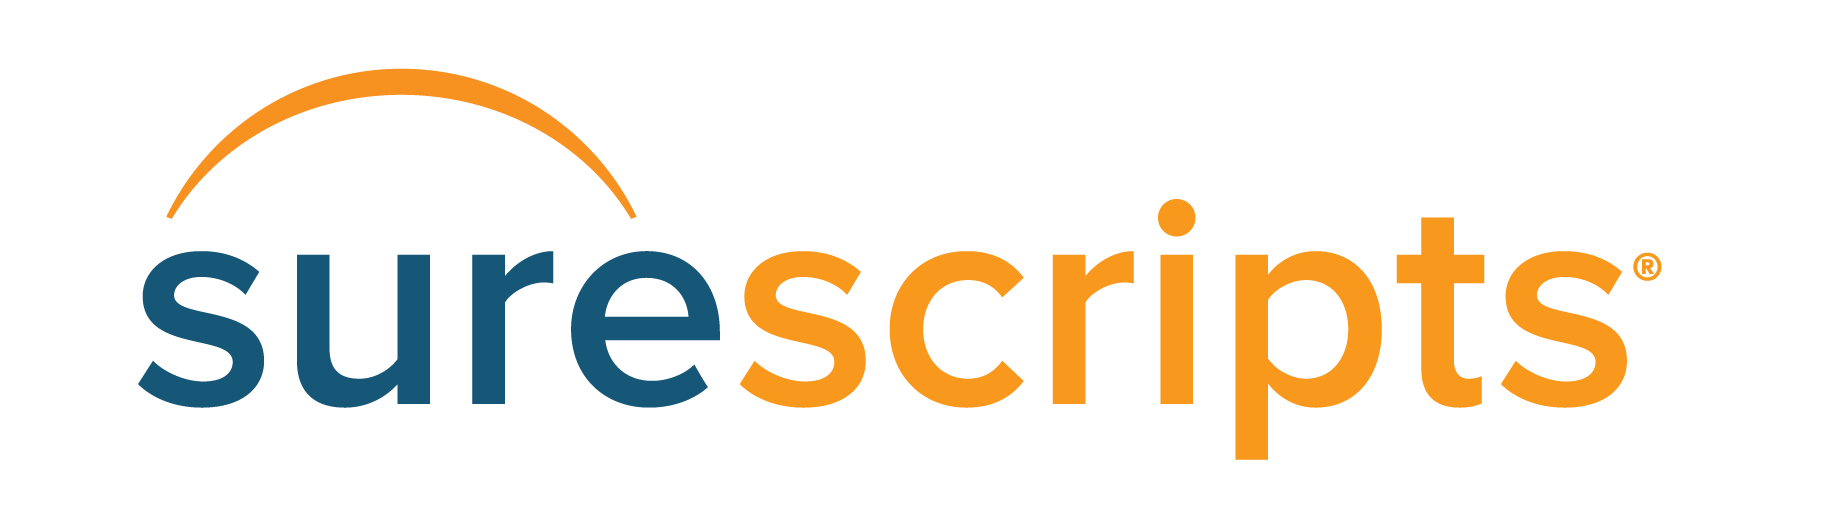 Surescripts Logo - Surescripts | Health Evolution